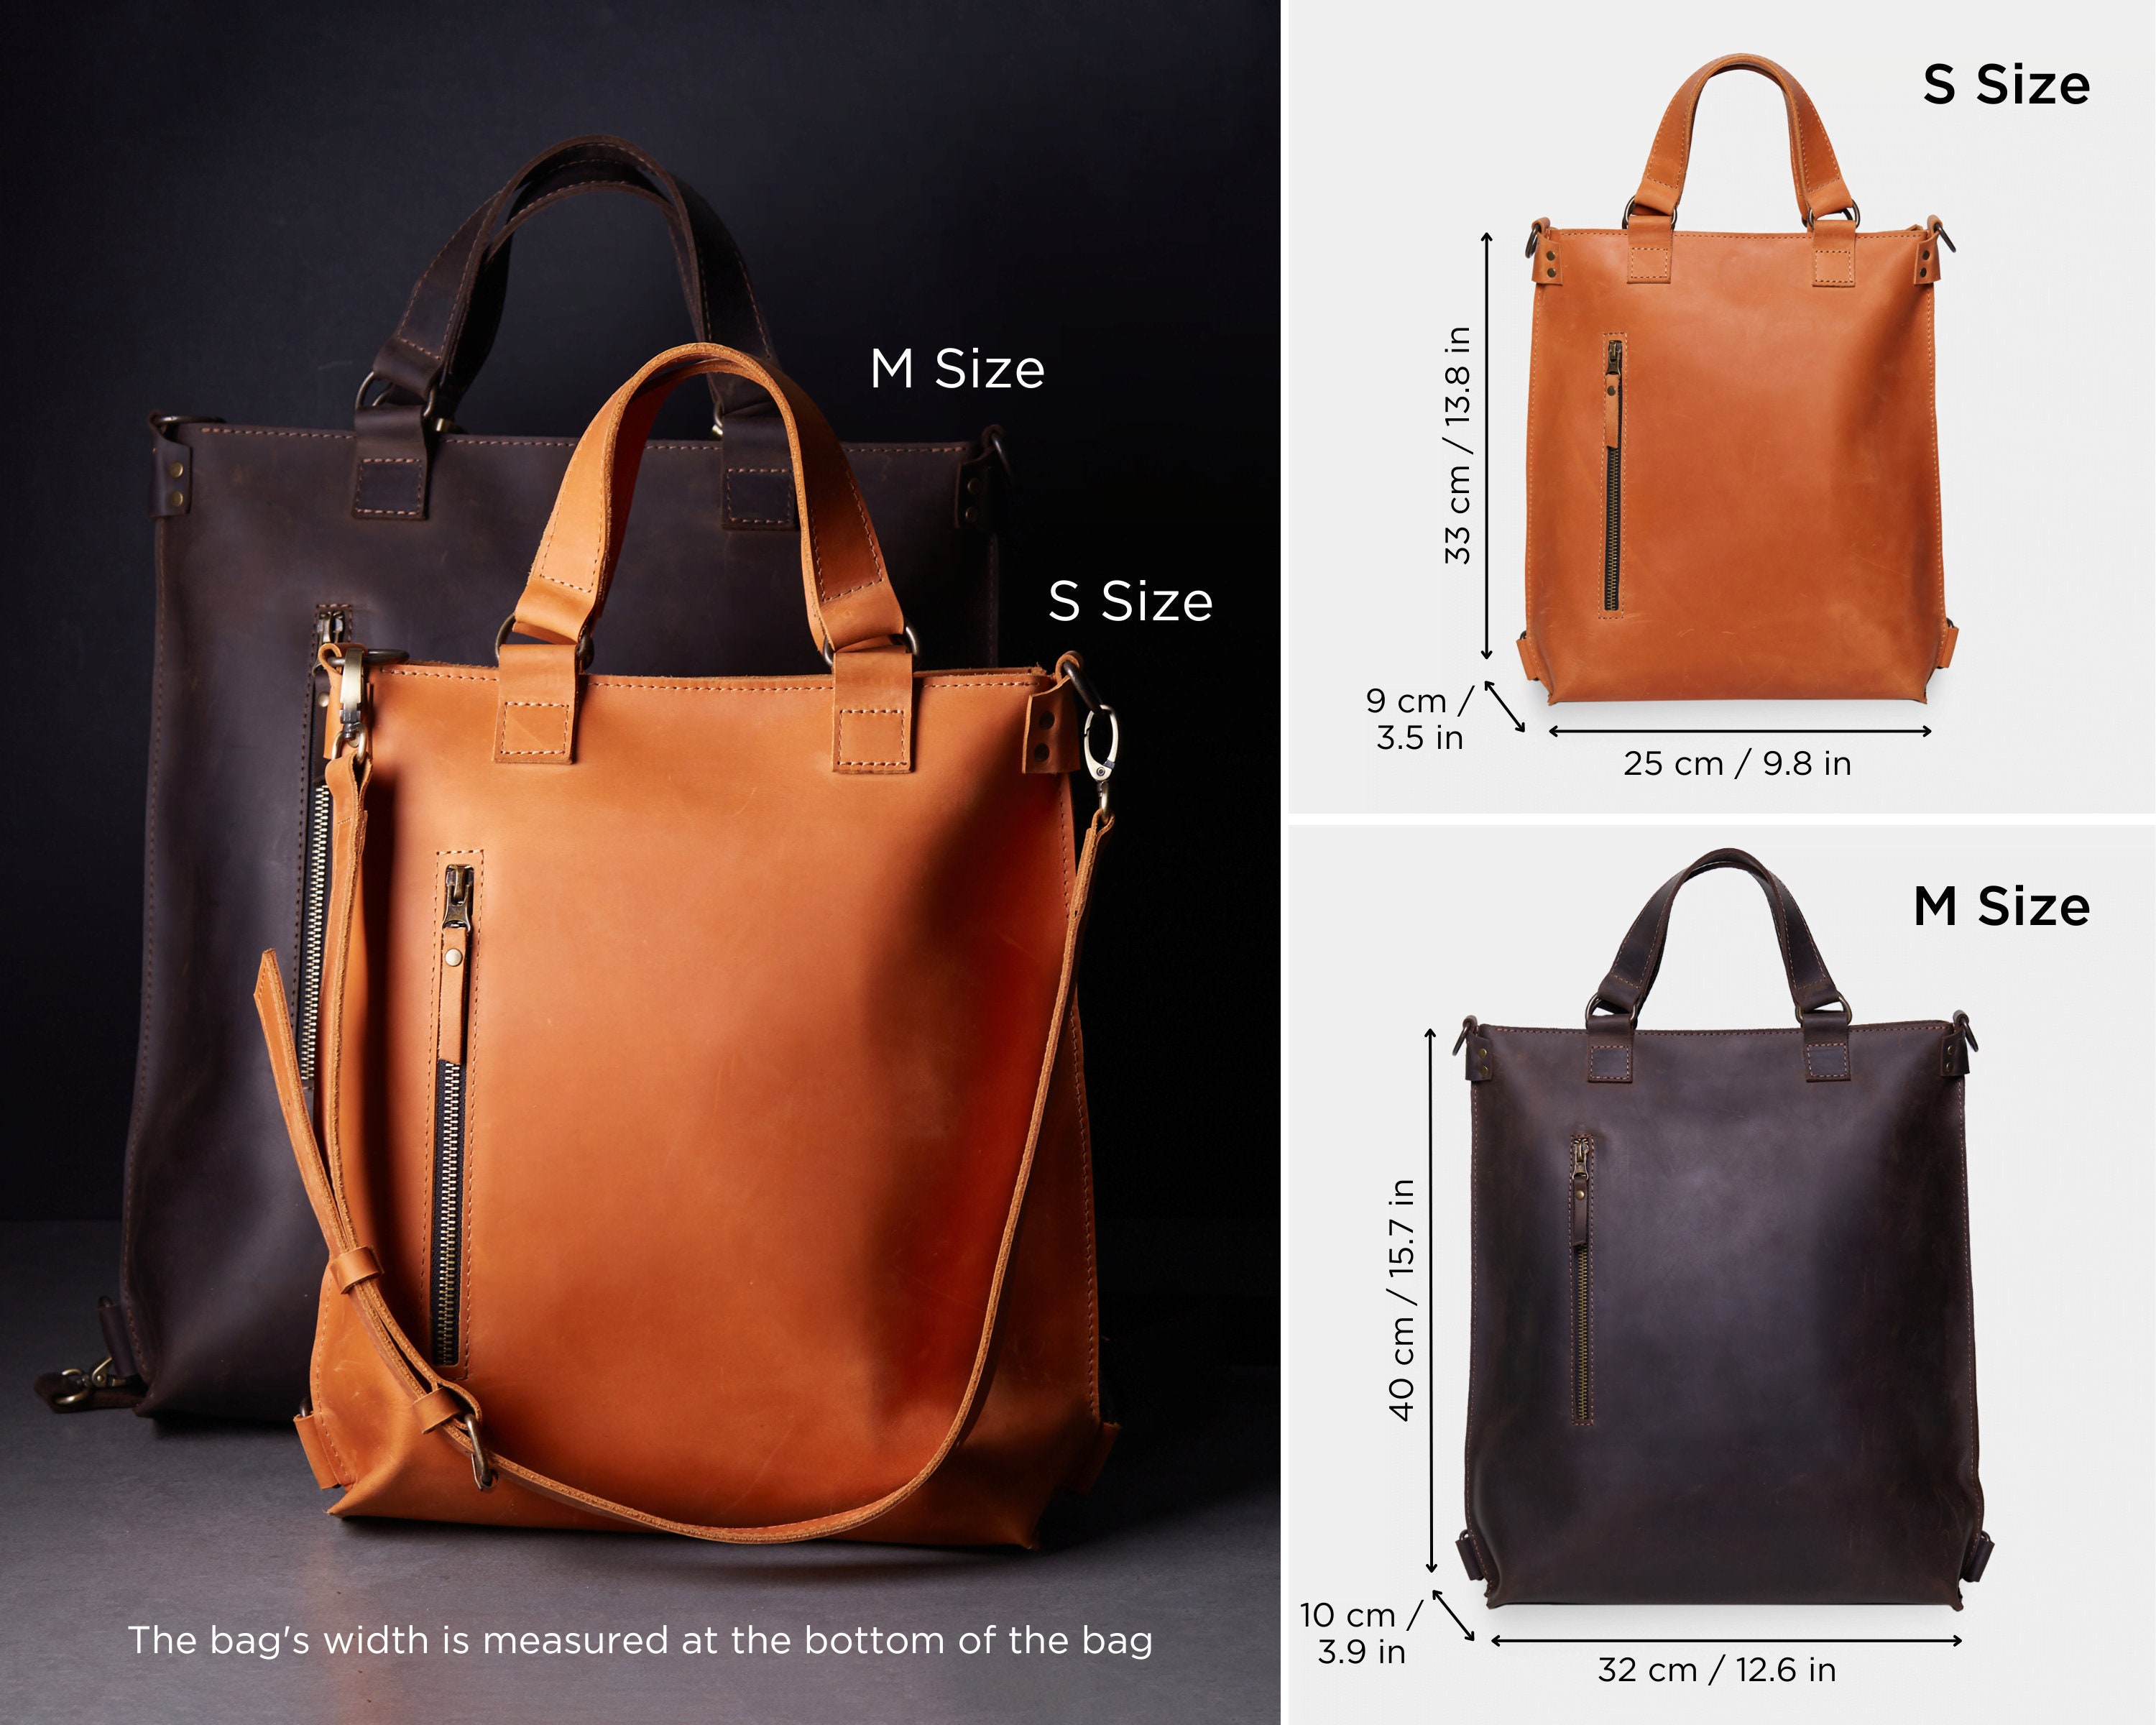 Fioretta Italian Genuine Leather Top Handle Backpack Purse Shoulder Bag Handbag Rucksack for Women - Cognac Brown